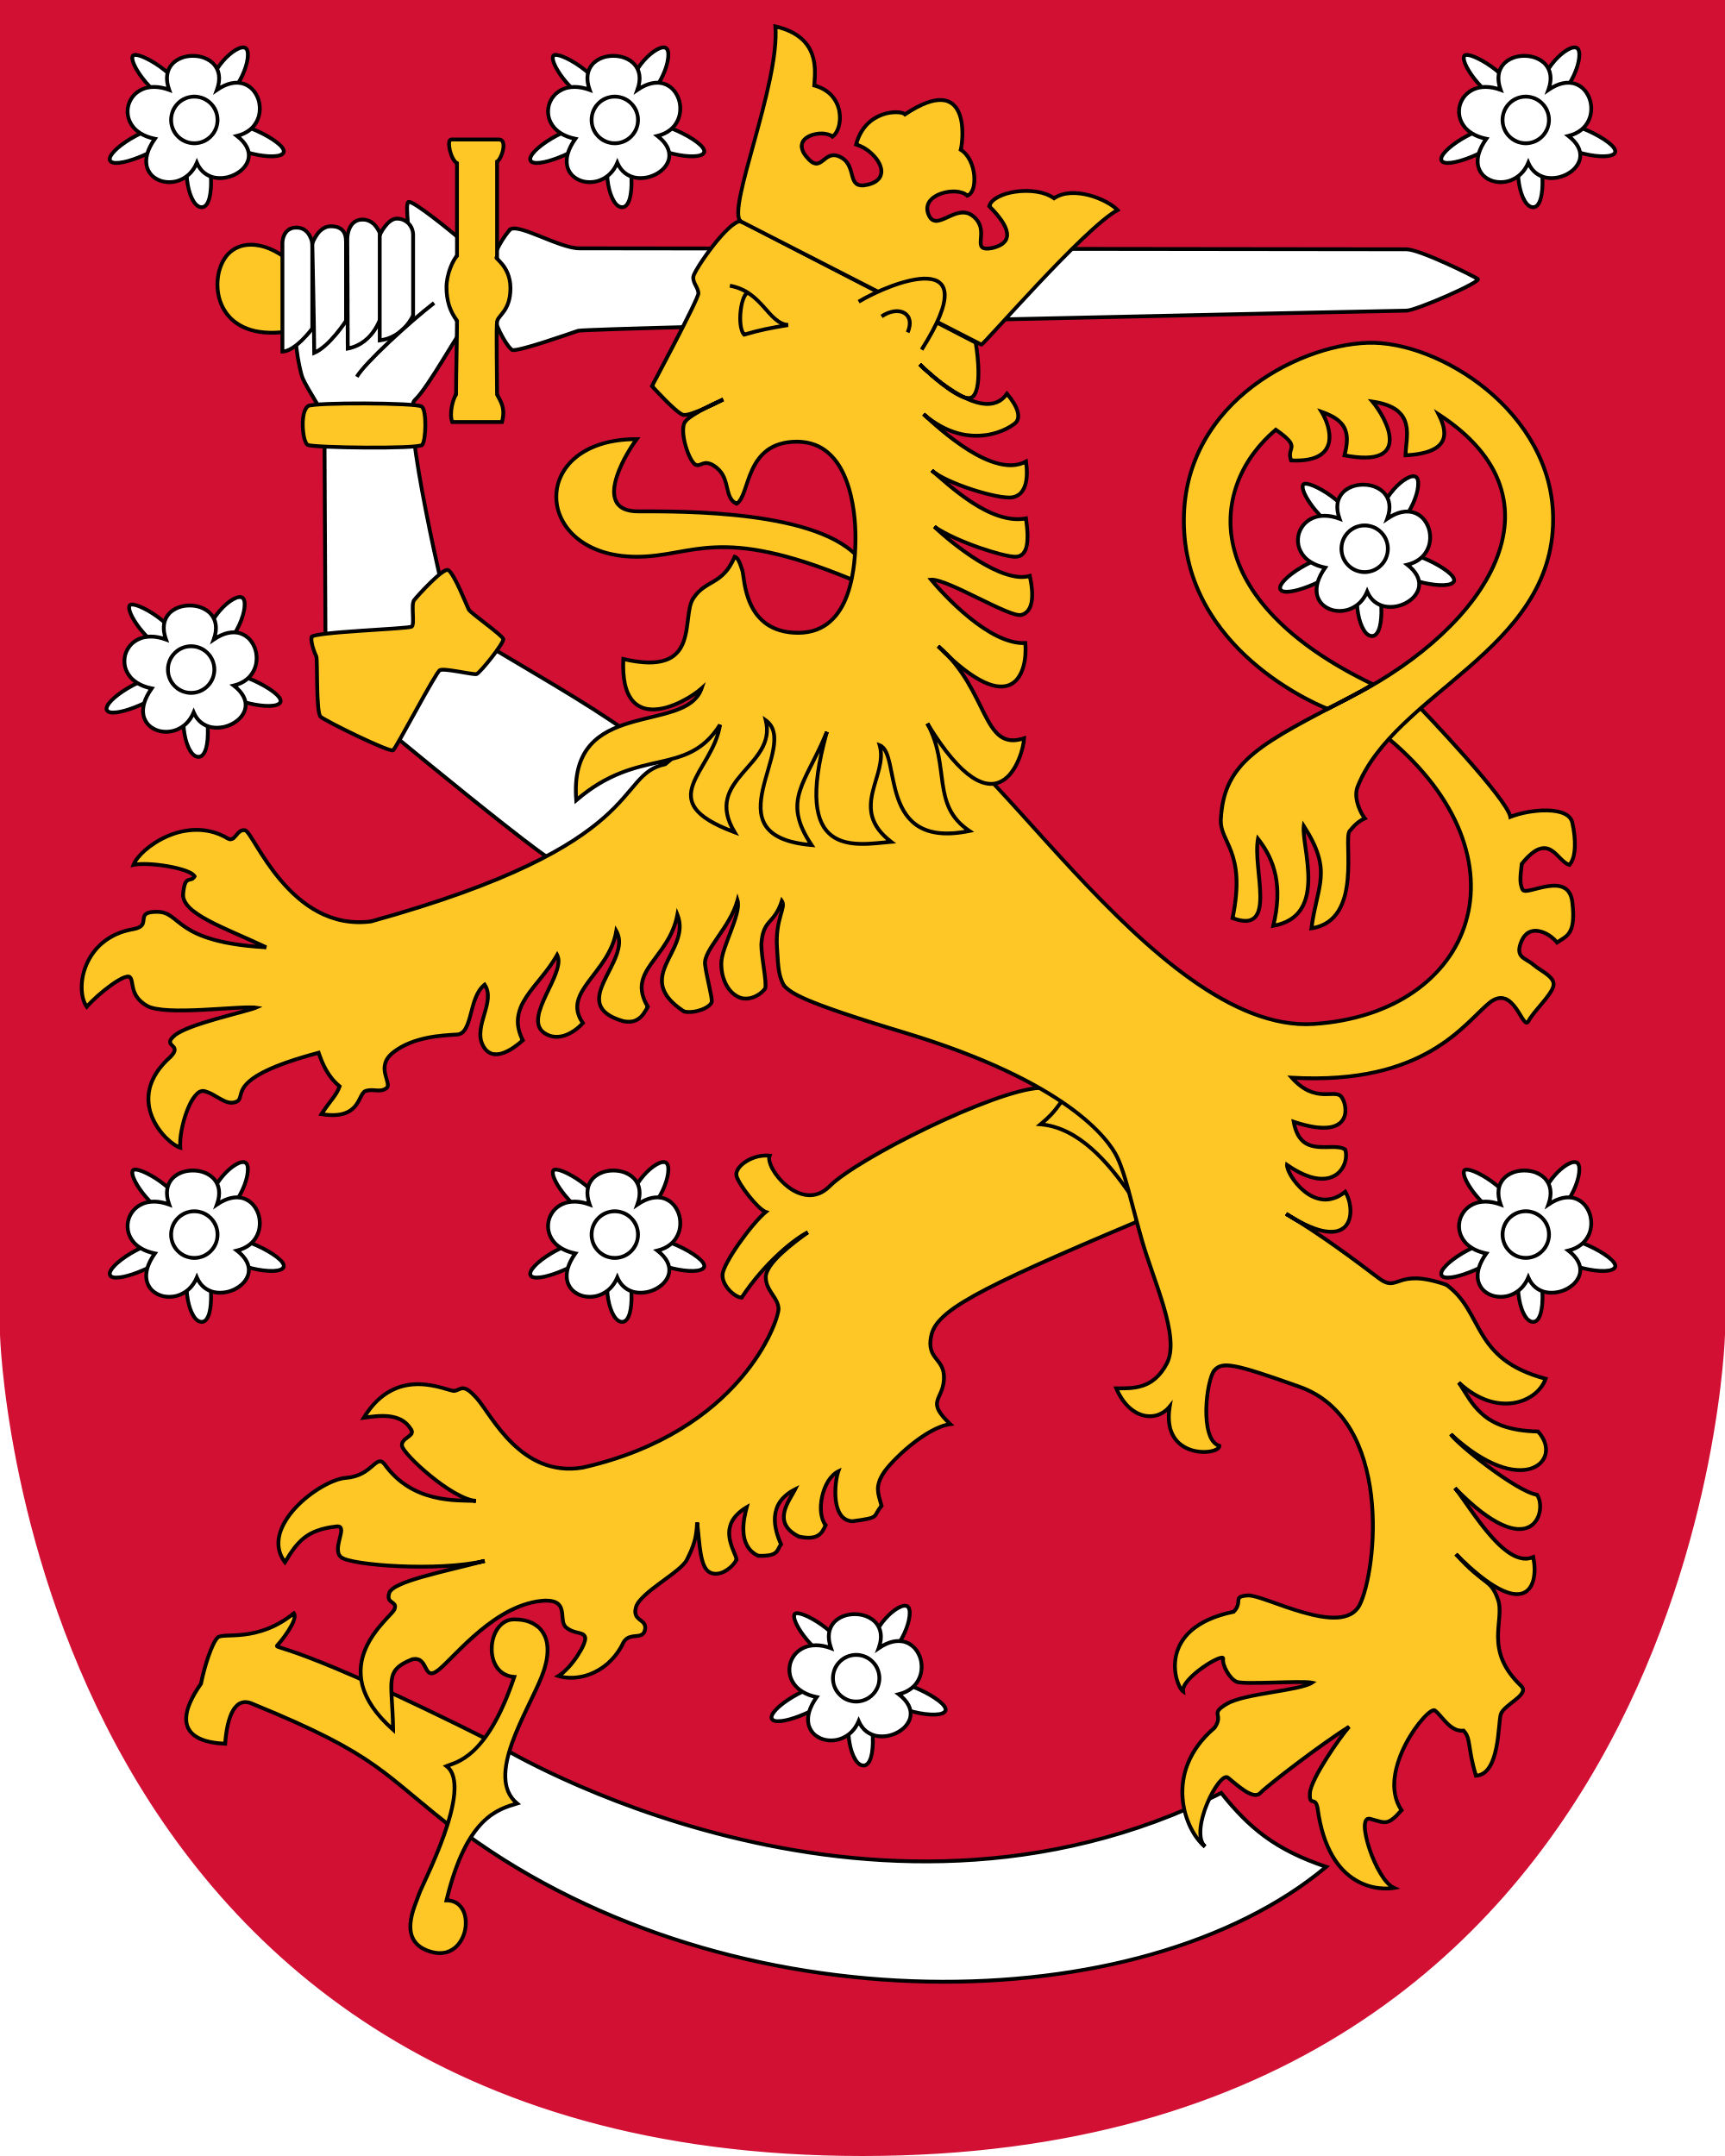 Emblem of Finland